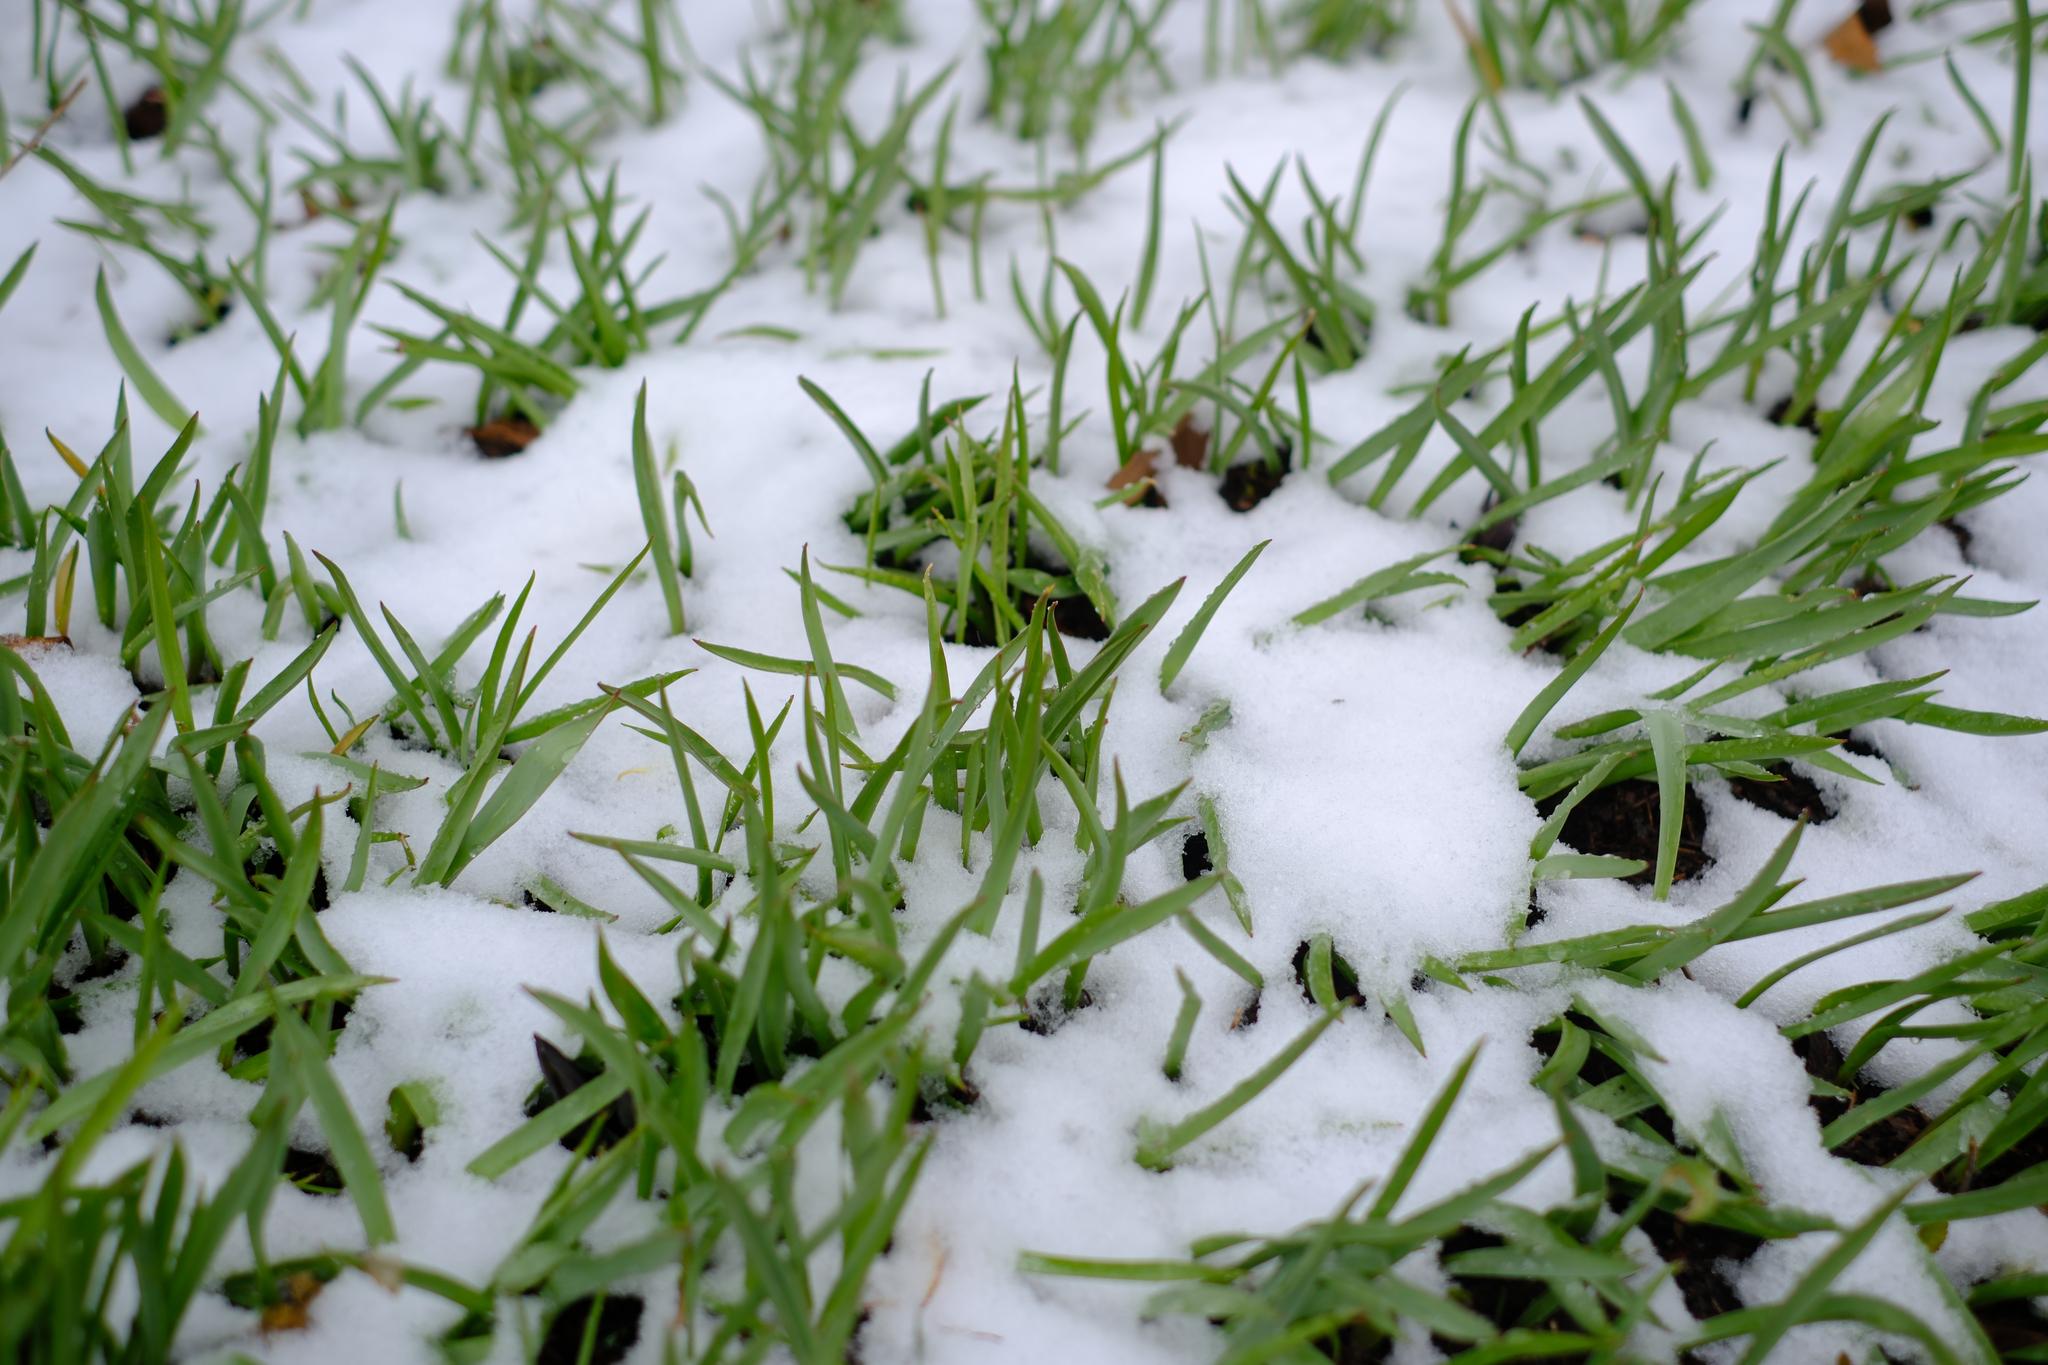 Green shoots of grass peeking through a dusting of snow